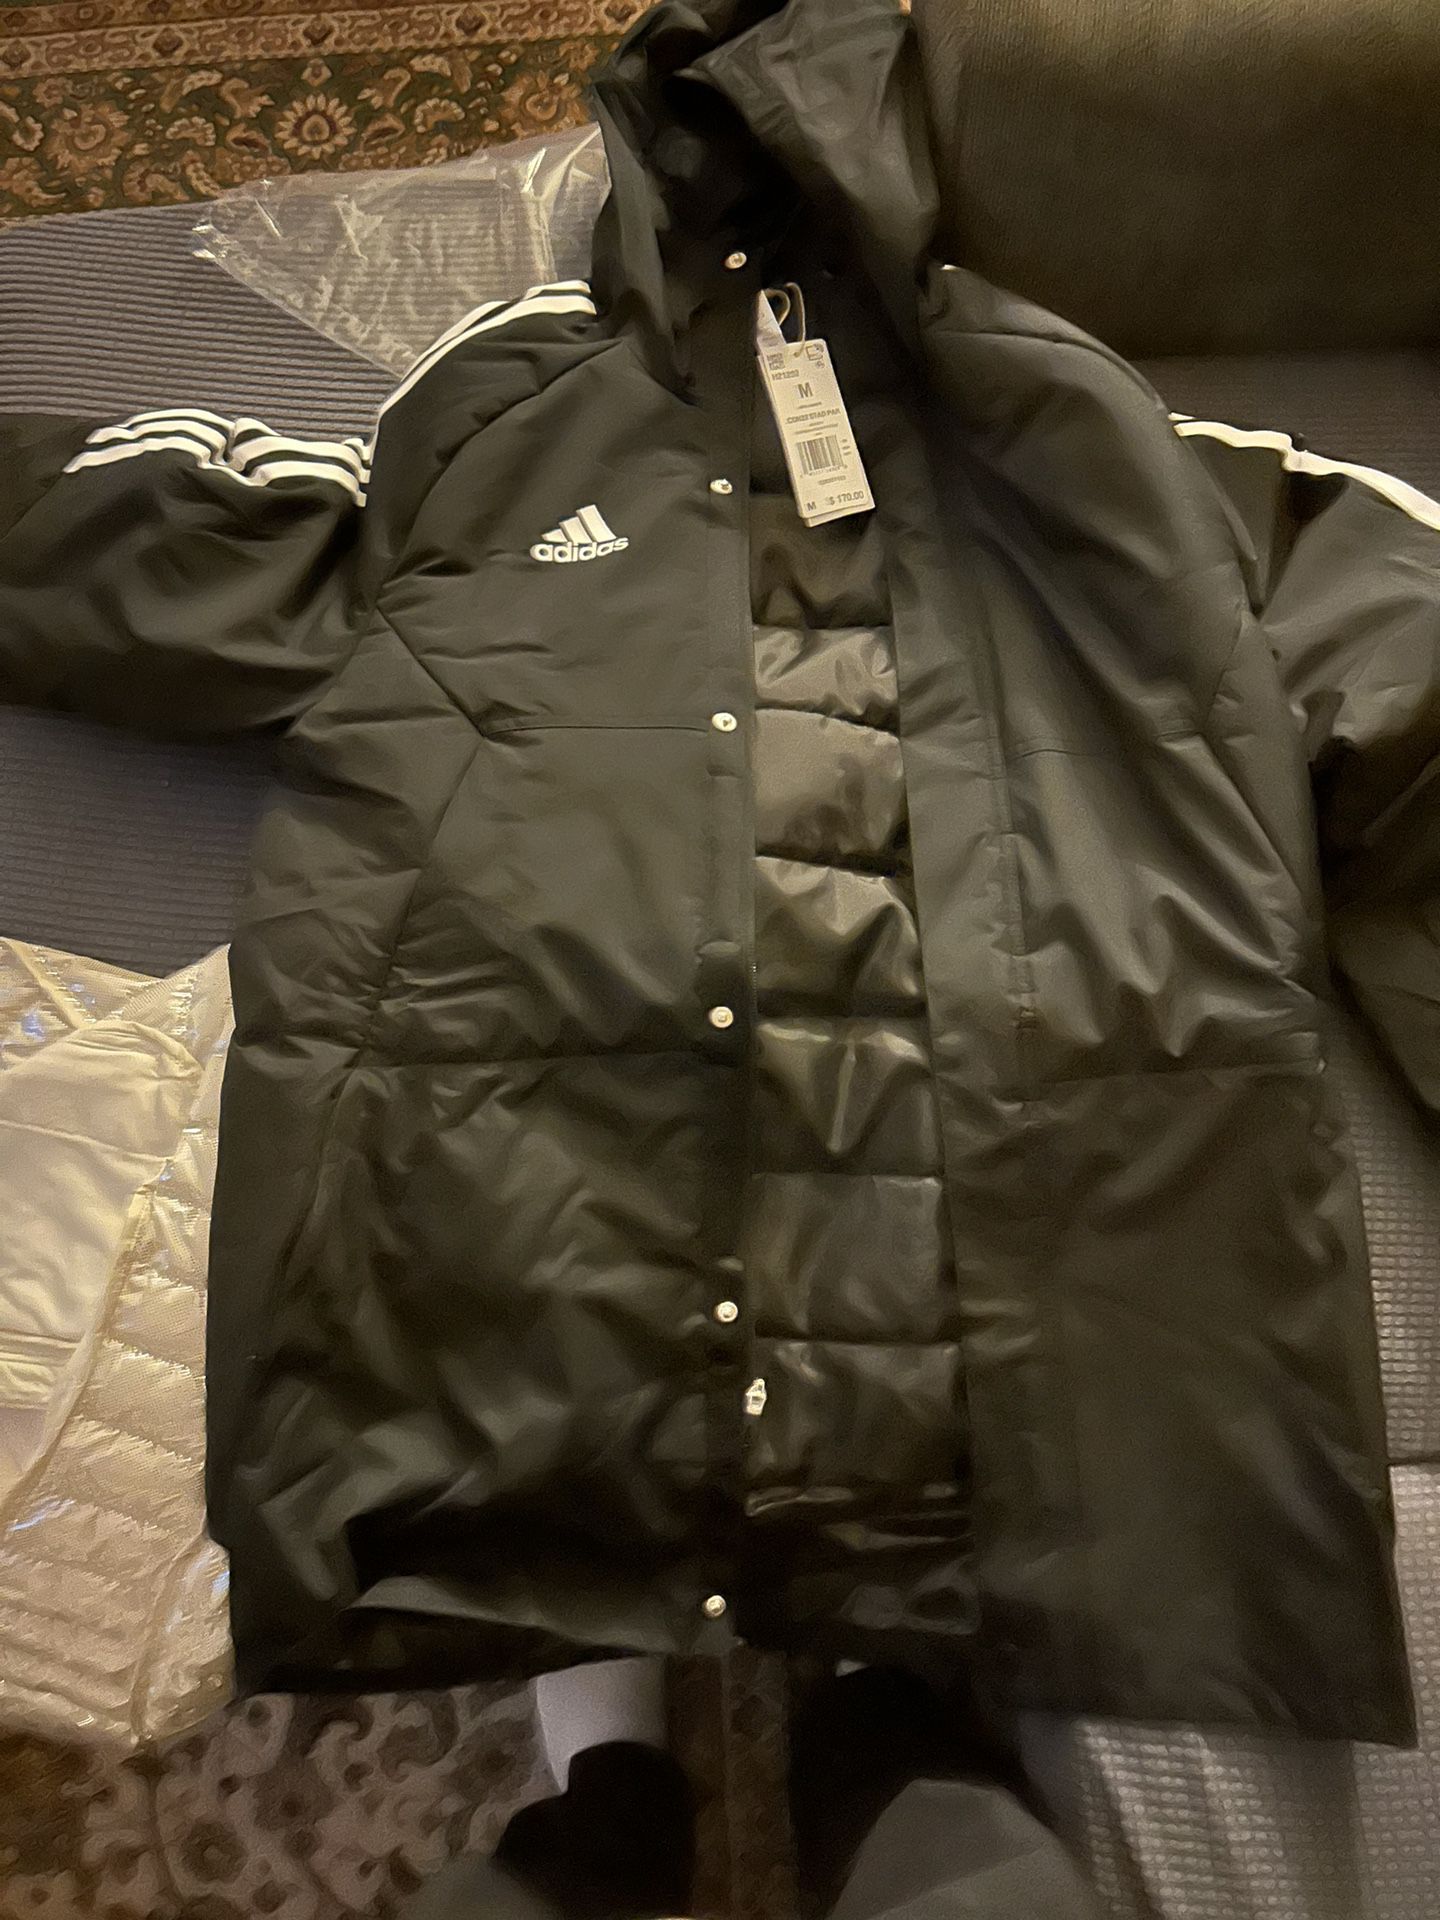 Adidas Winter Jacket 